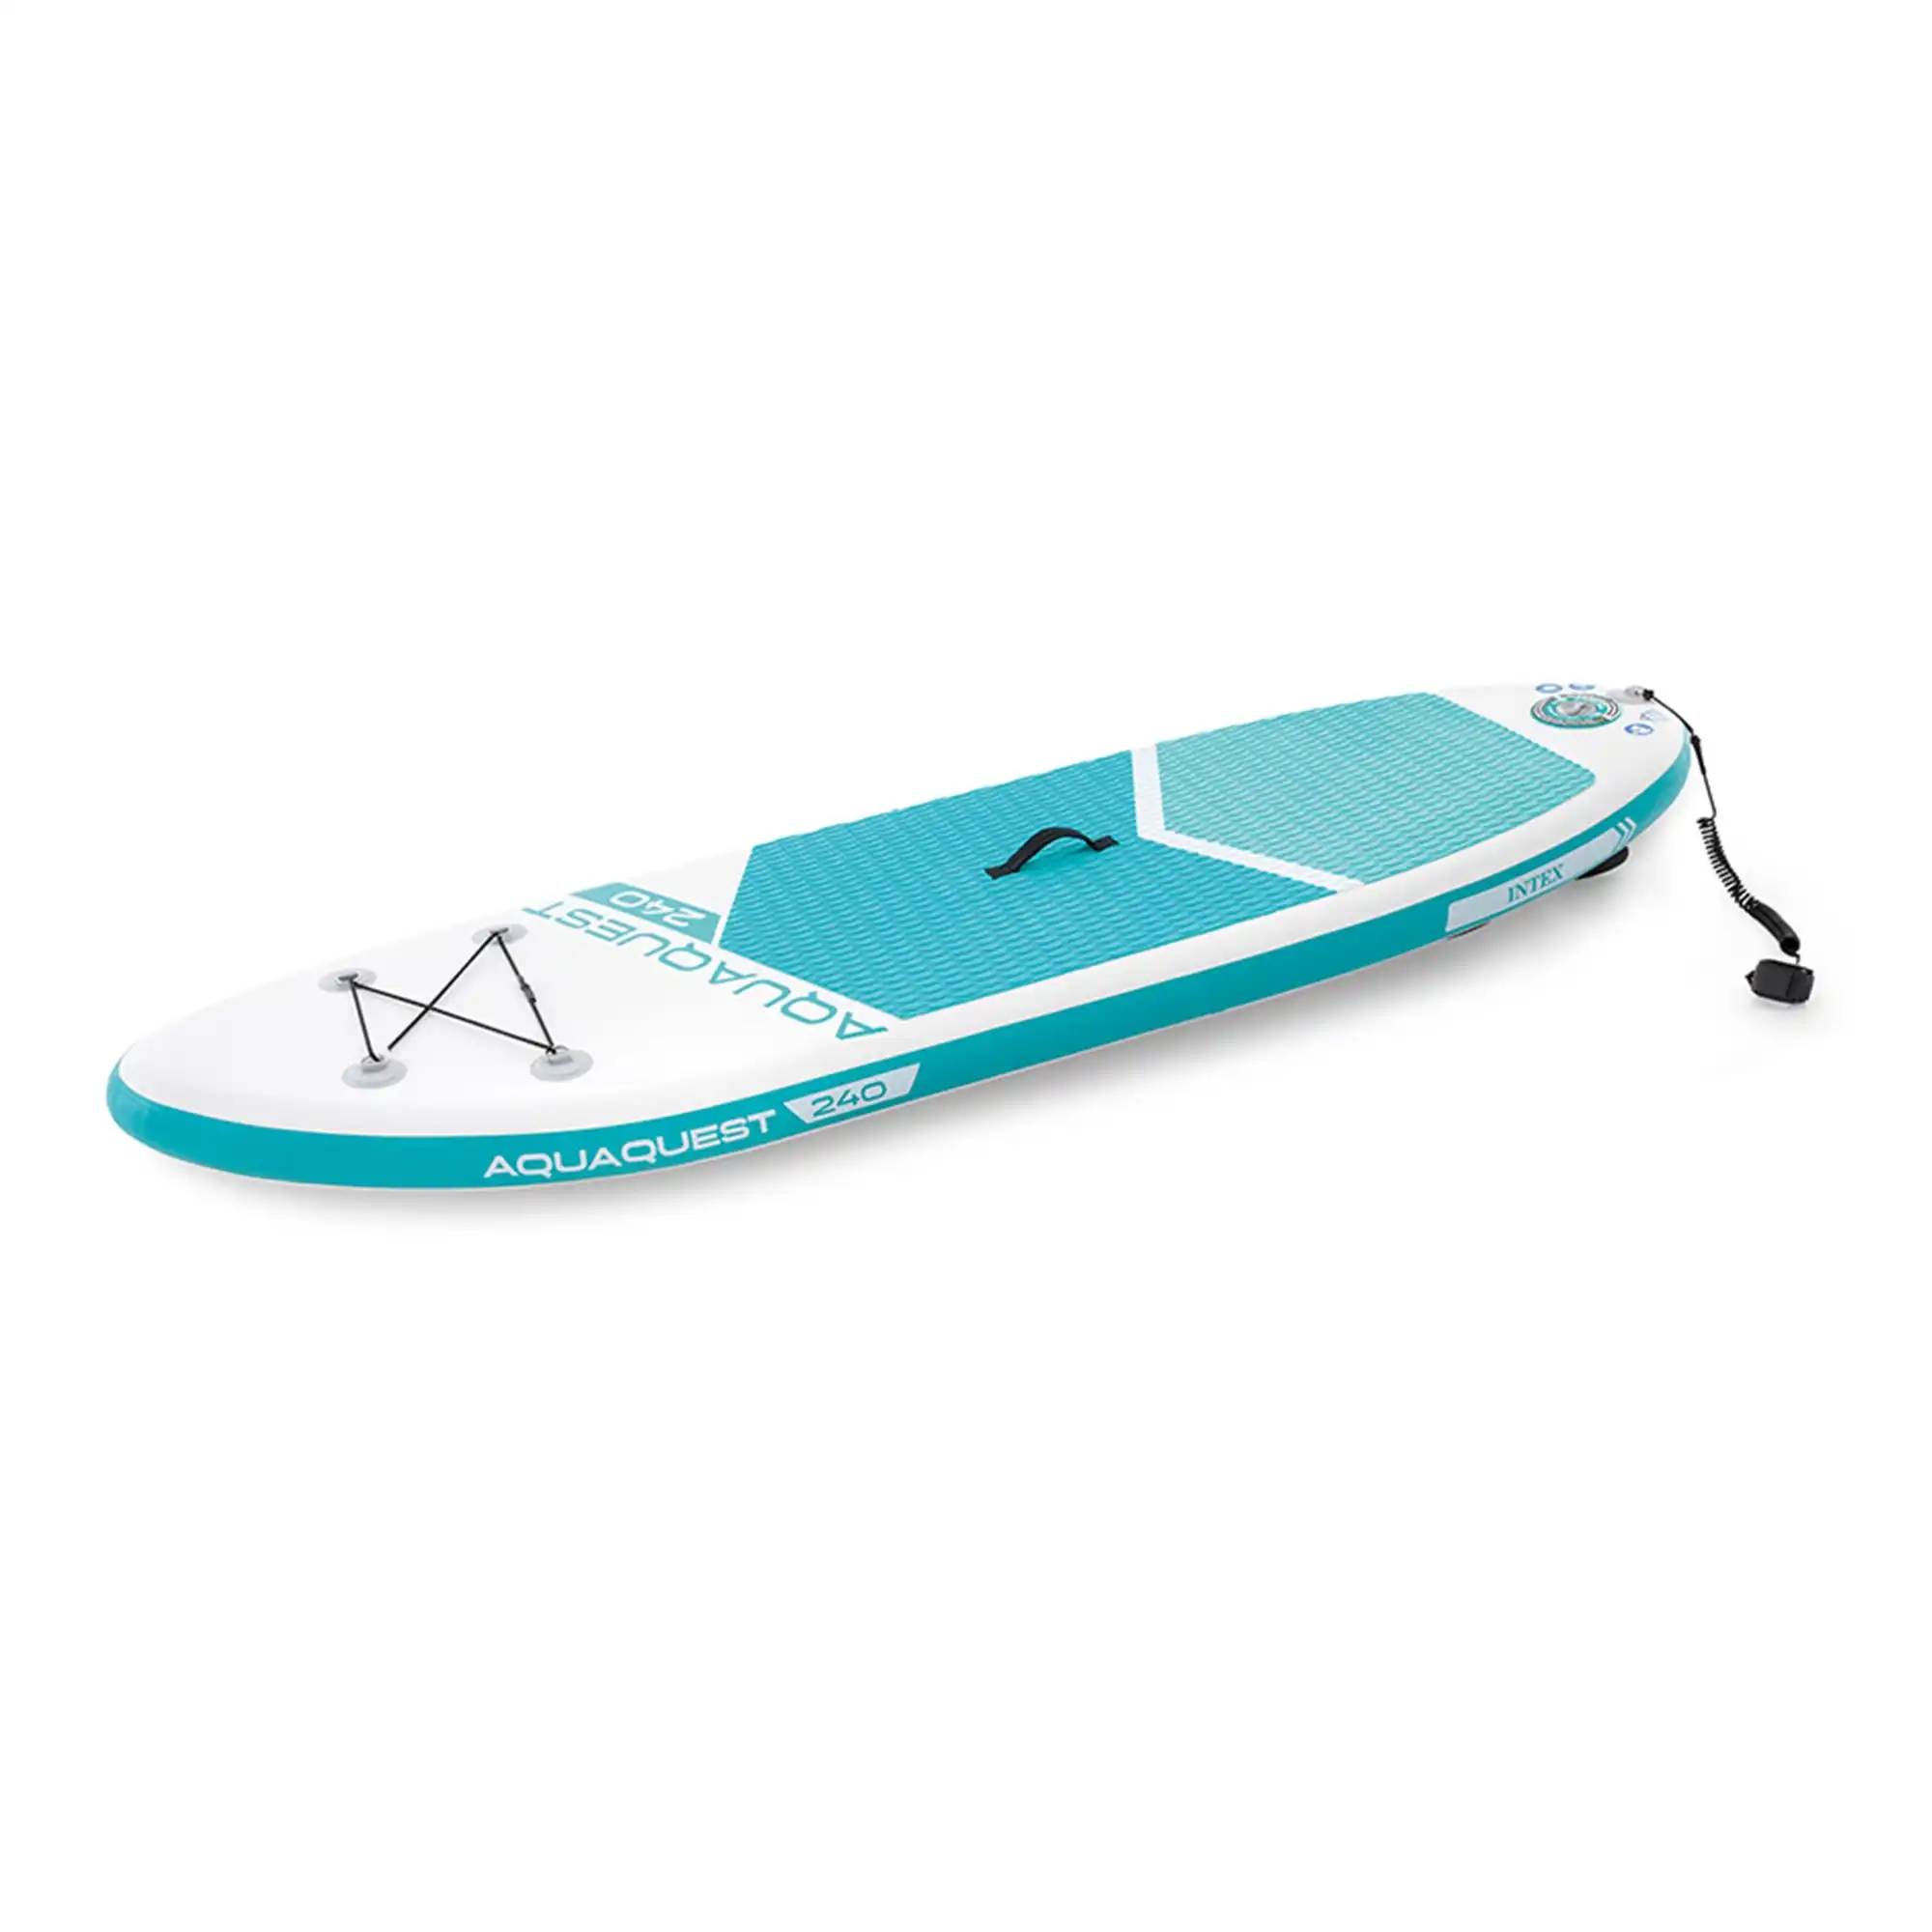 Irklentė Aquaquest 320 SUP Paddleboard